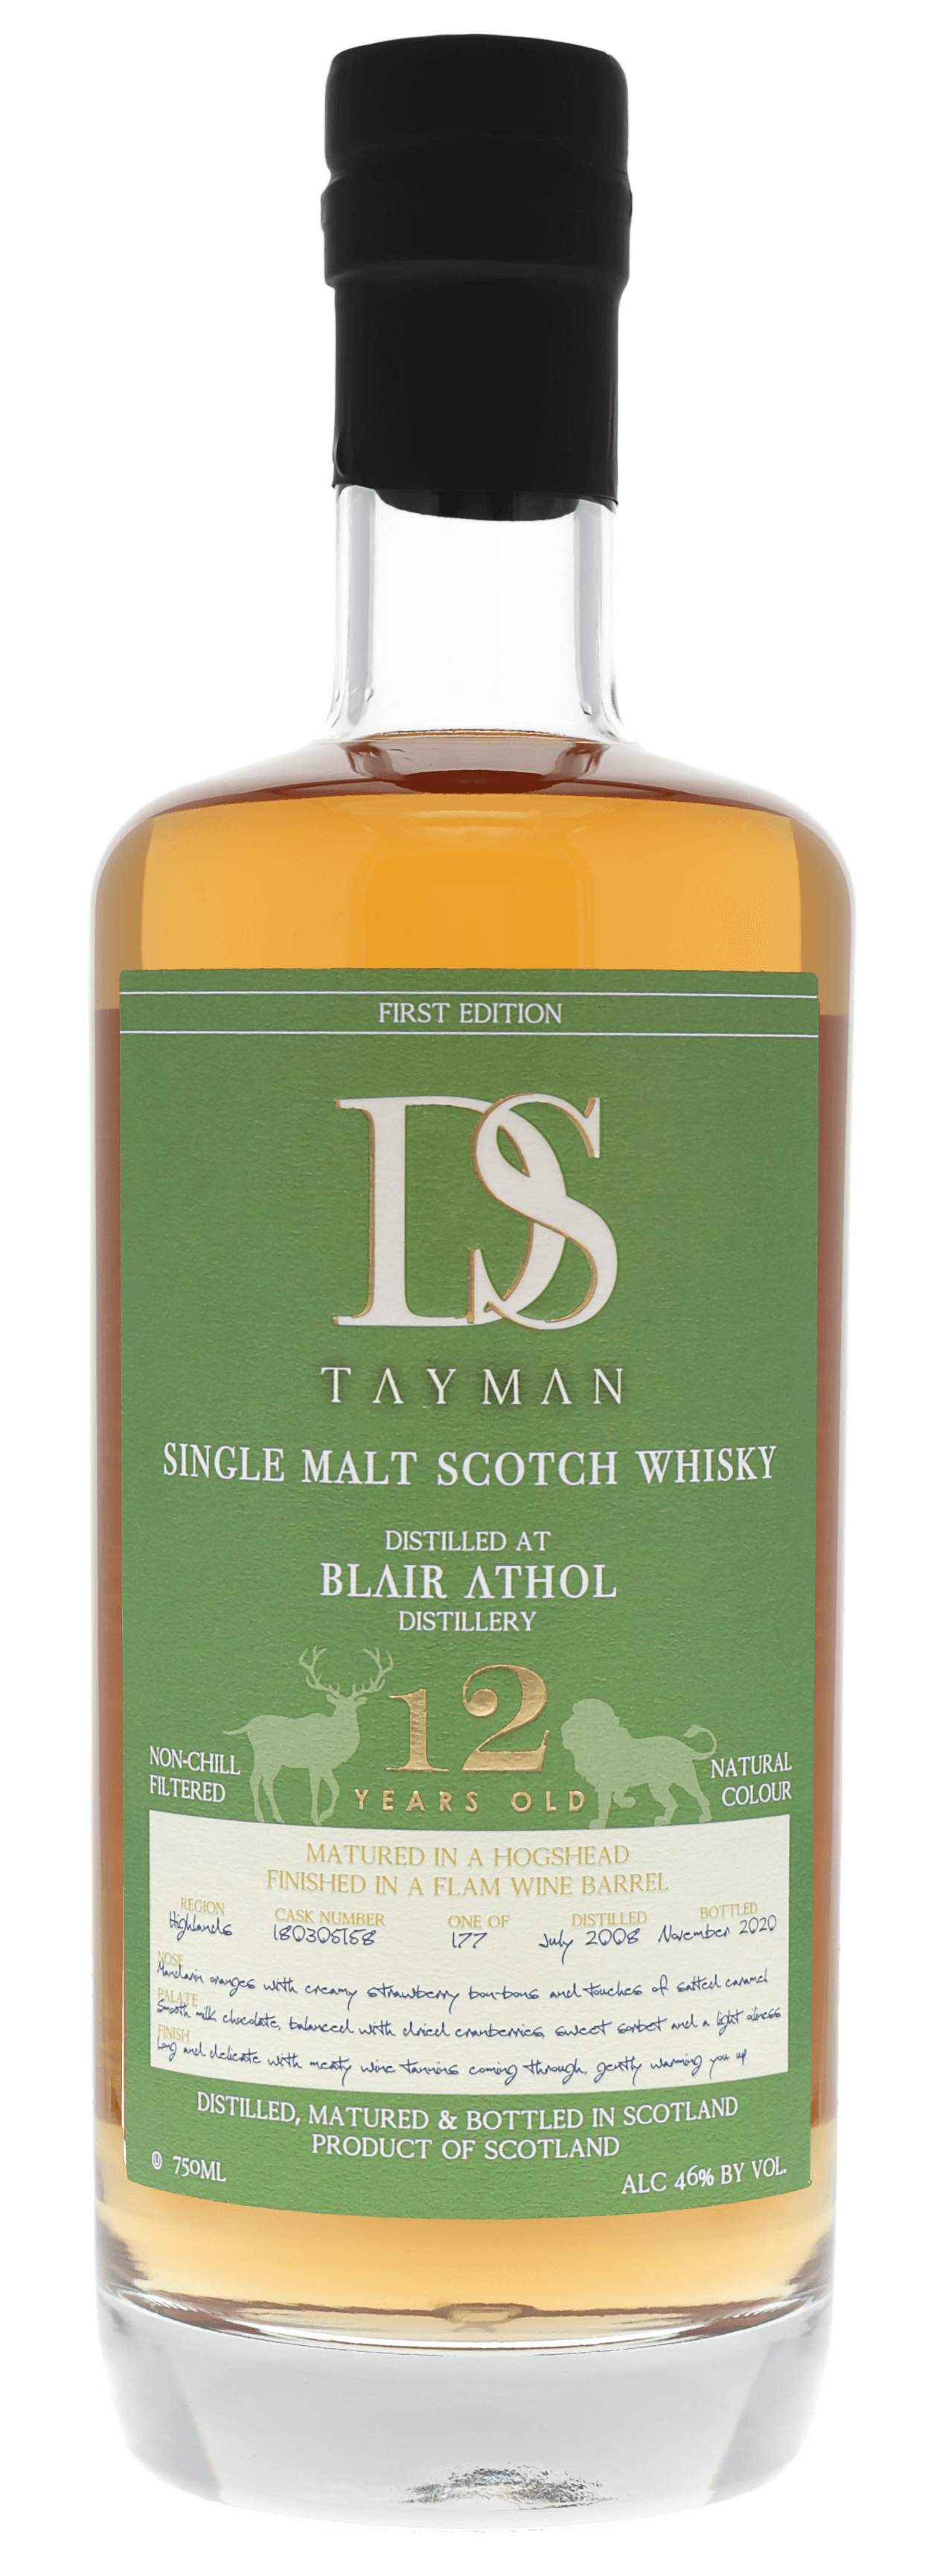 DS Tayman Blair Athol 12 Year Single Malt Scotch Whisky